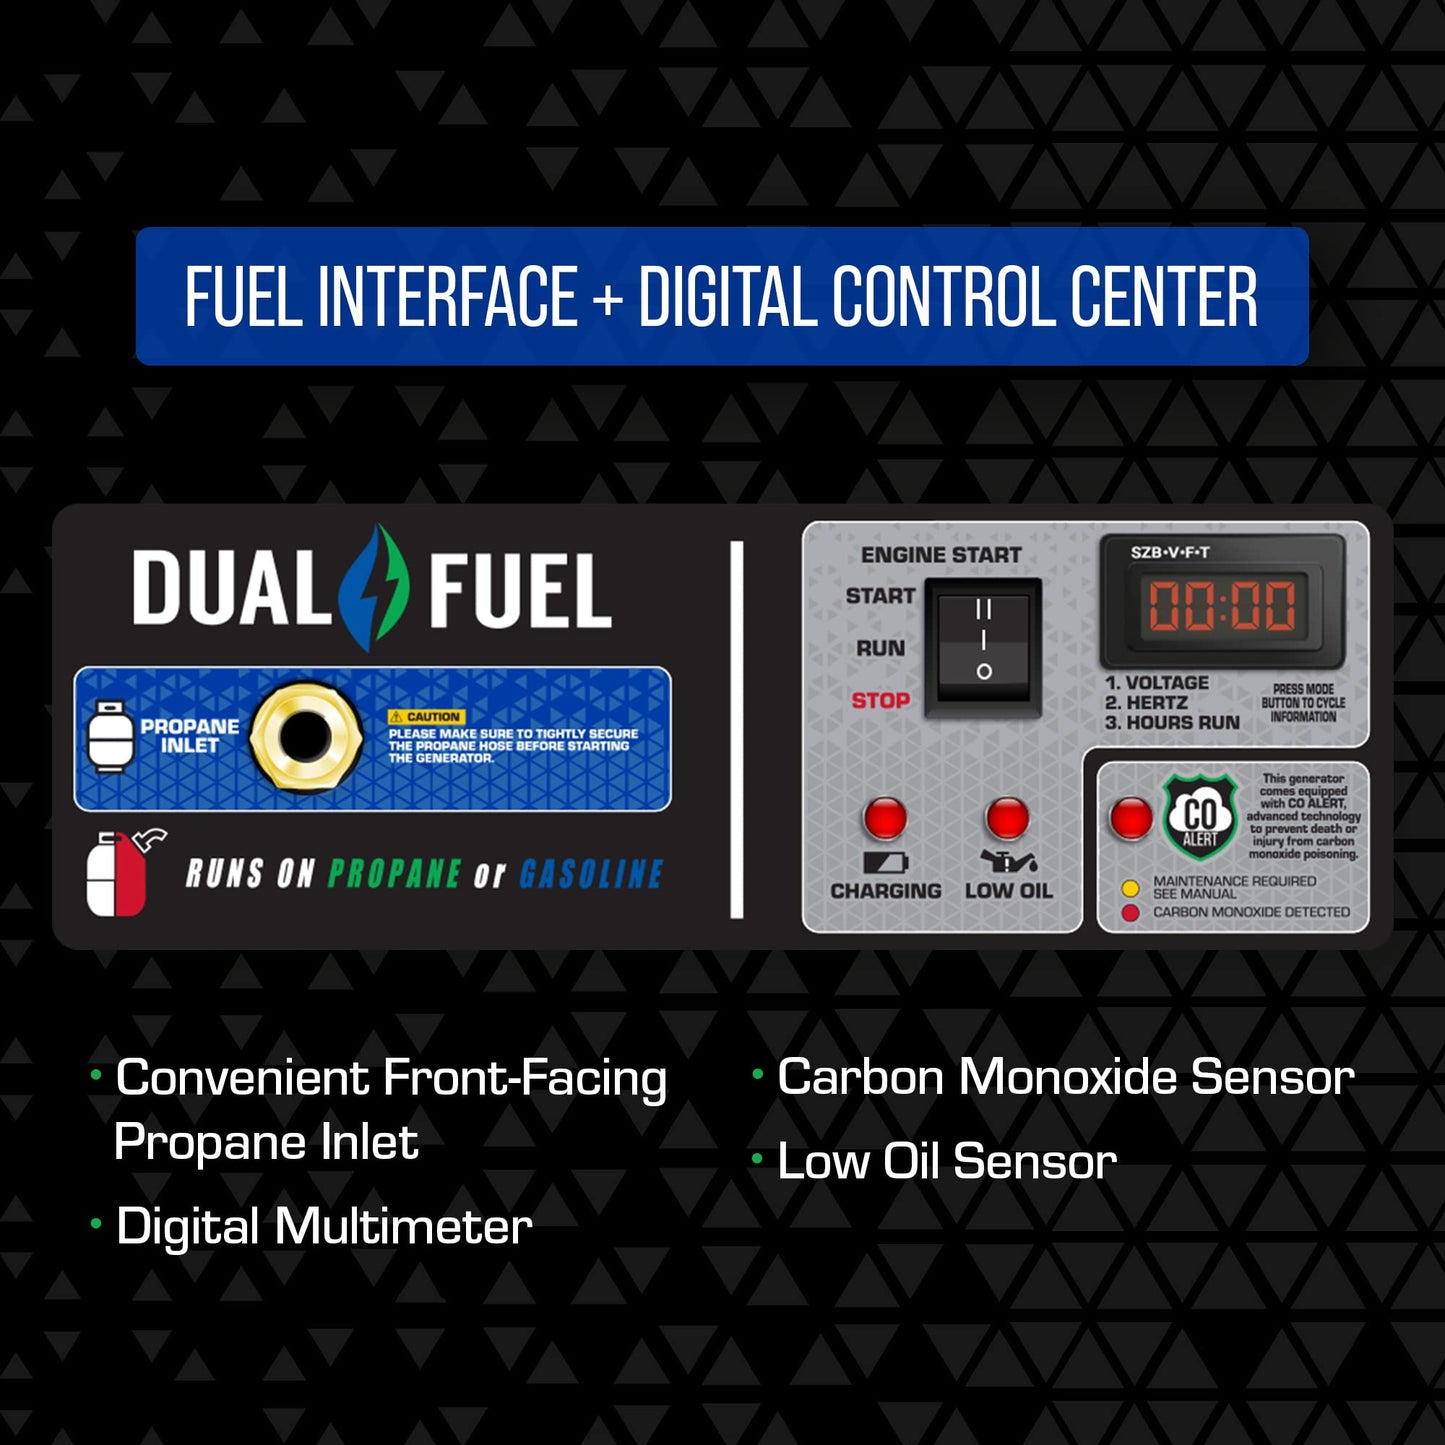 DuroMax XP5500HX Dual Fuel Portable Generator-5500 Watt Gas or Propane Powered Electric Start w/CO Alert, 50 State Approved, Blue 5,500-Watt Dual Fuel